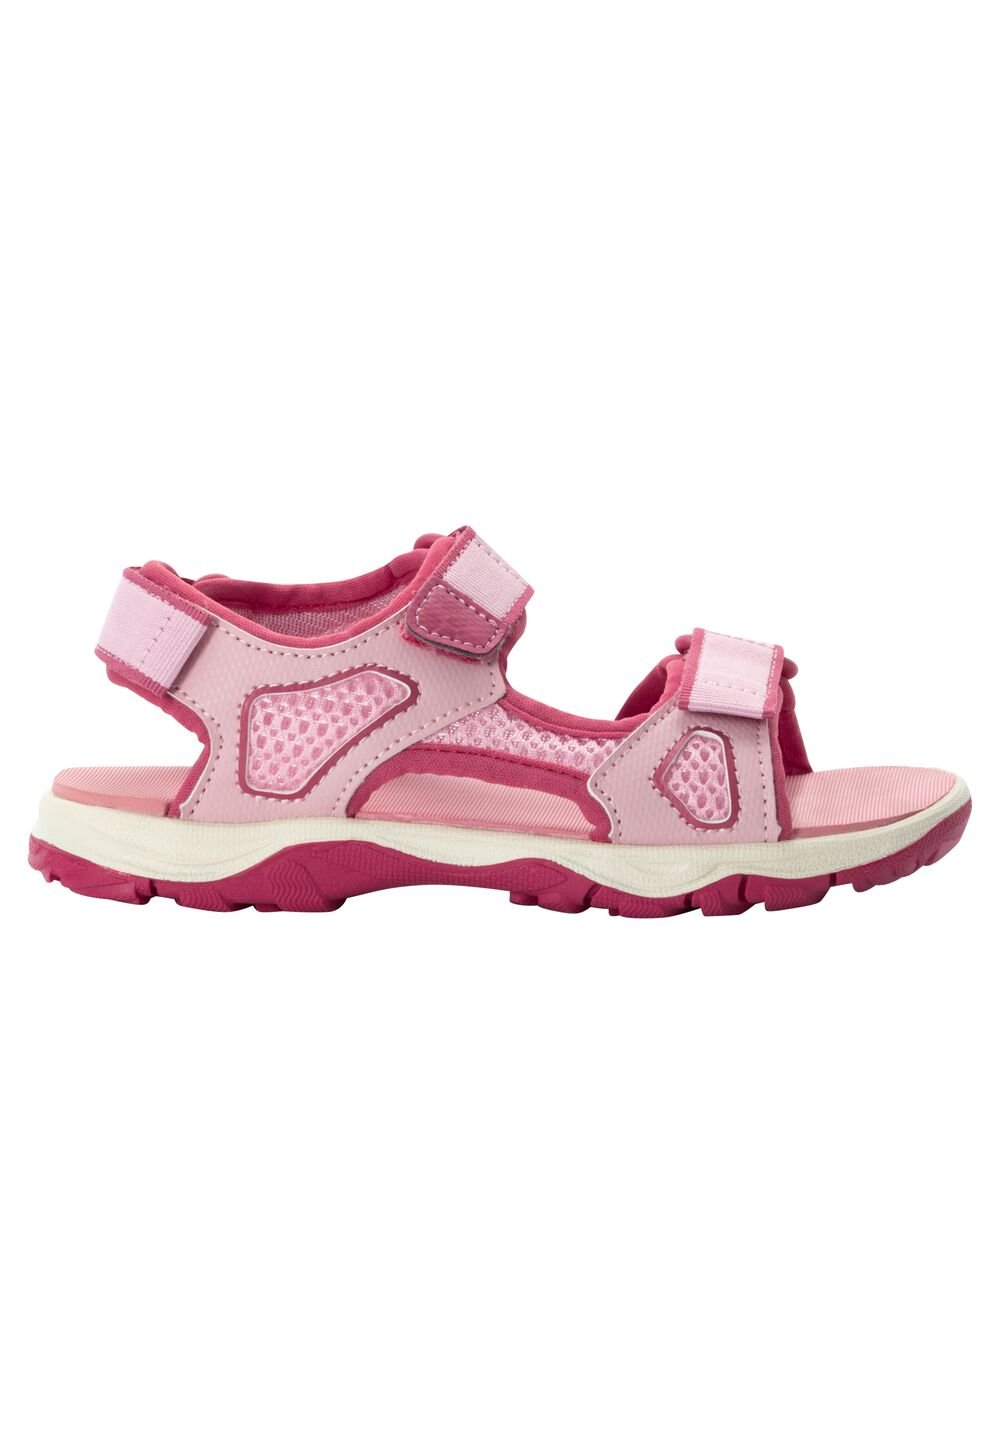 Jack Wolfskin Taraco Beach Sandal Kids Kinderen sandalen 38 soft pink soft pink